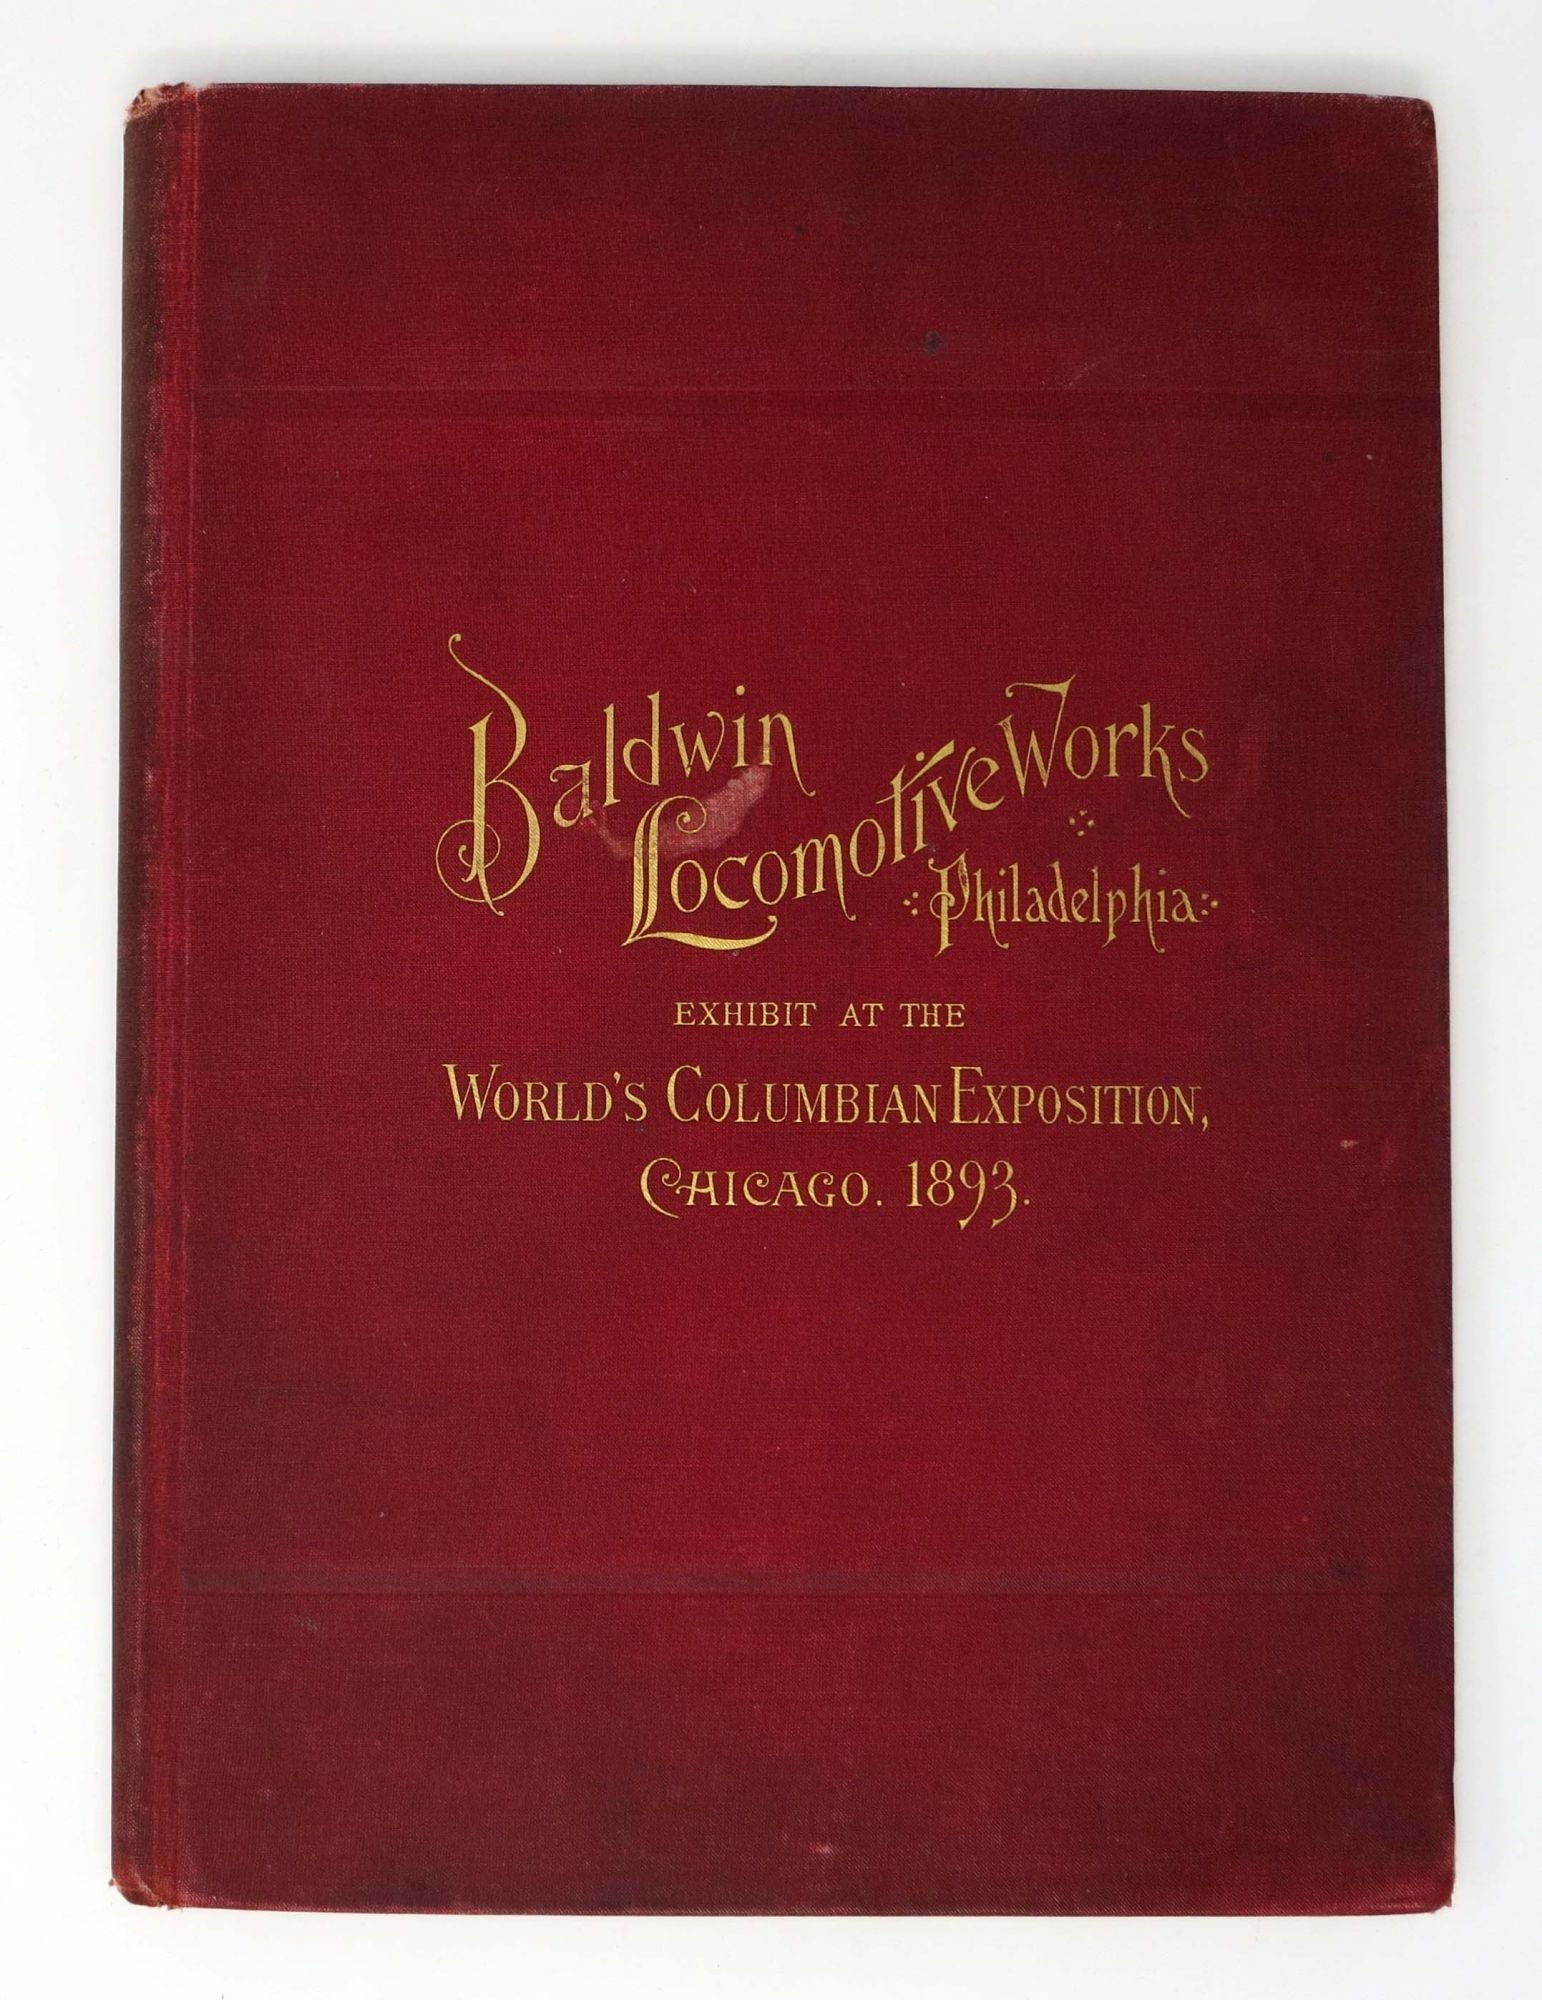 [Railroad Trade / Exhibition Catalogue] - EXHIBIT Of LOCOMOTIVES By The BALDWIN LOCOMOTIVE WORKS, Burnham, Parry, Williams & Co., Proprietors, Philadelphia, Pa., U.S.A. The World's Columbian Exposition, Chicago, Illinois, May - October, 1893